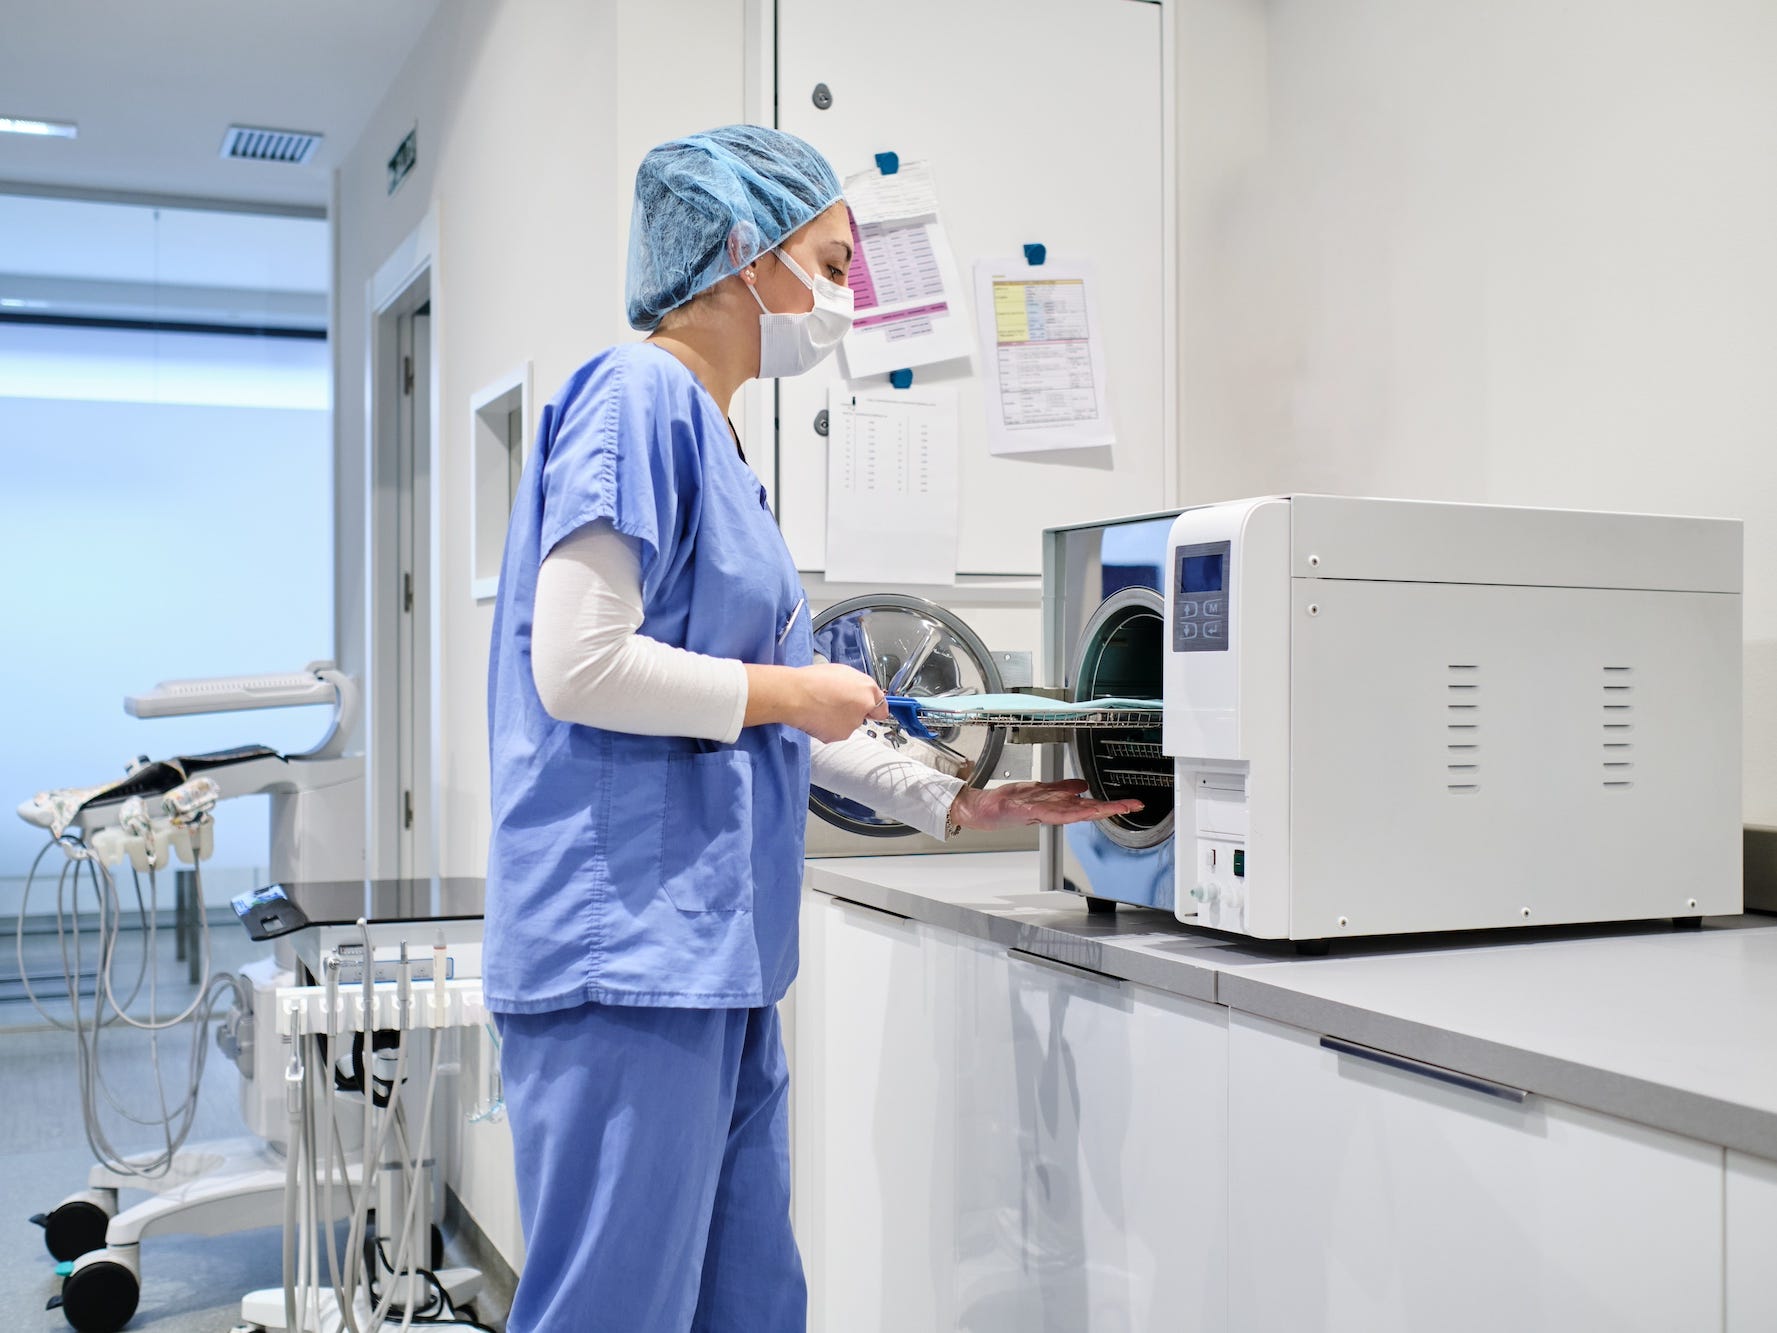 Arbeiter sterilisiert medizinische Geräte